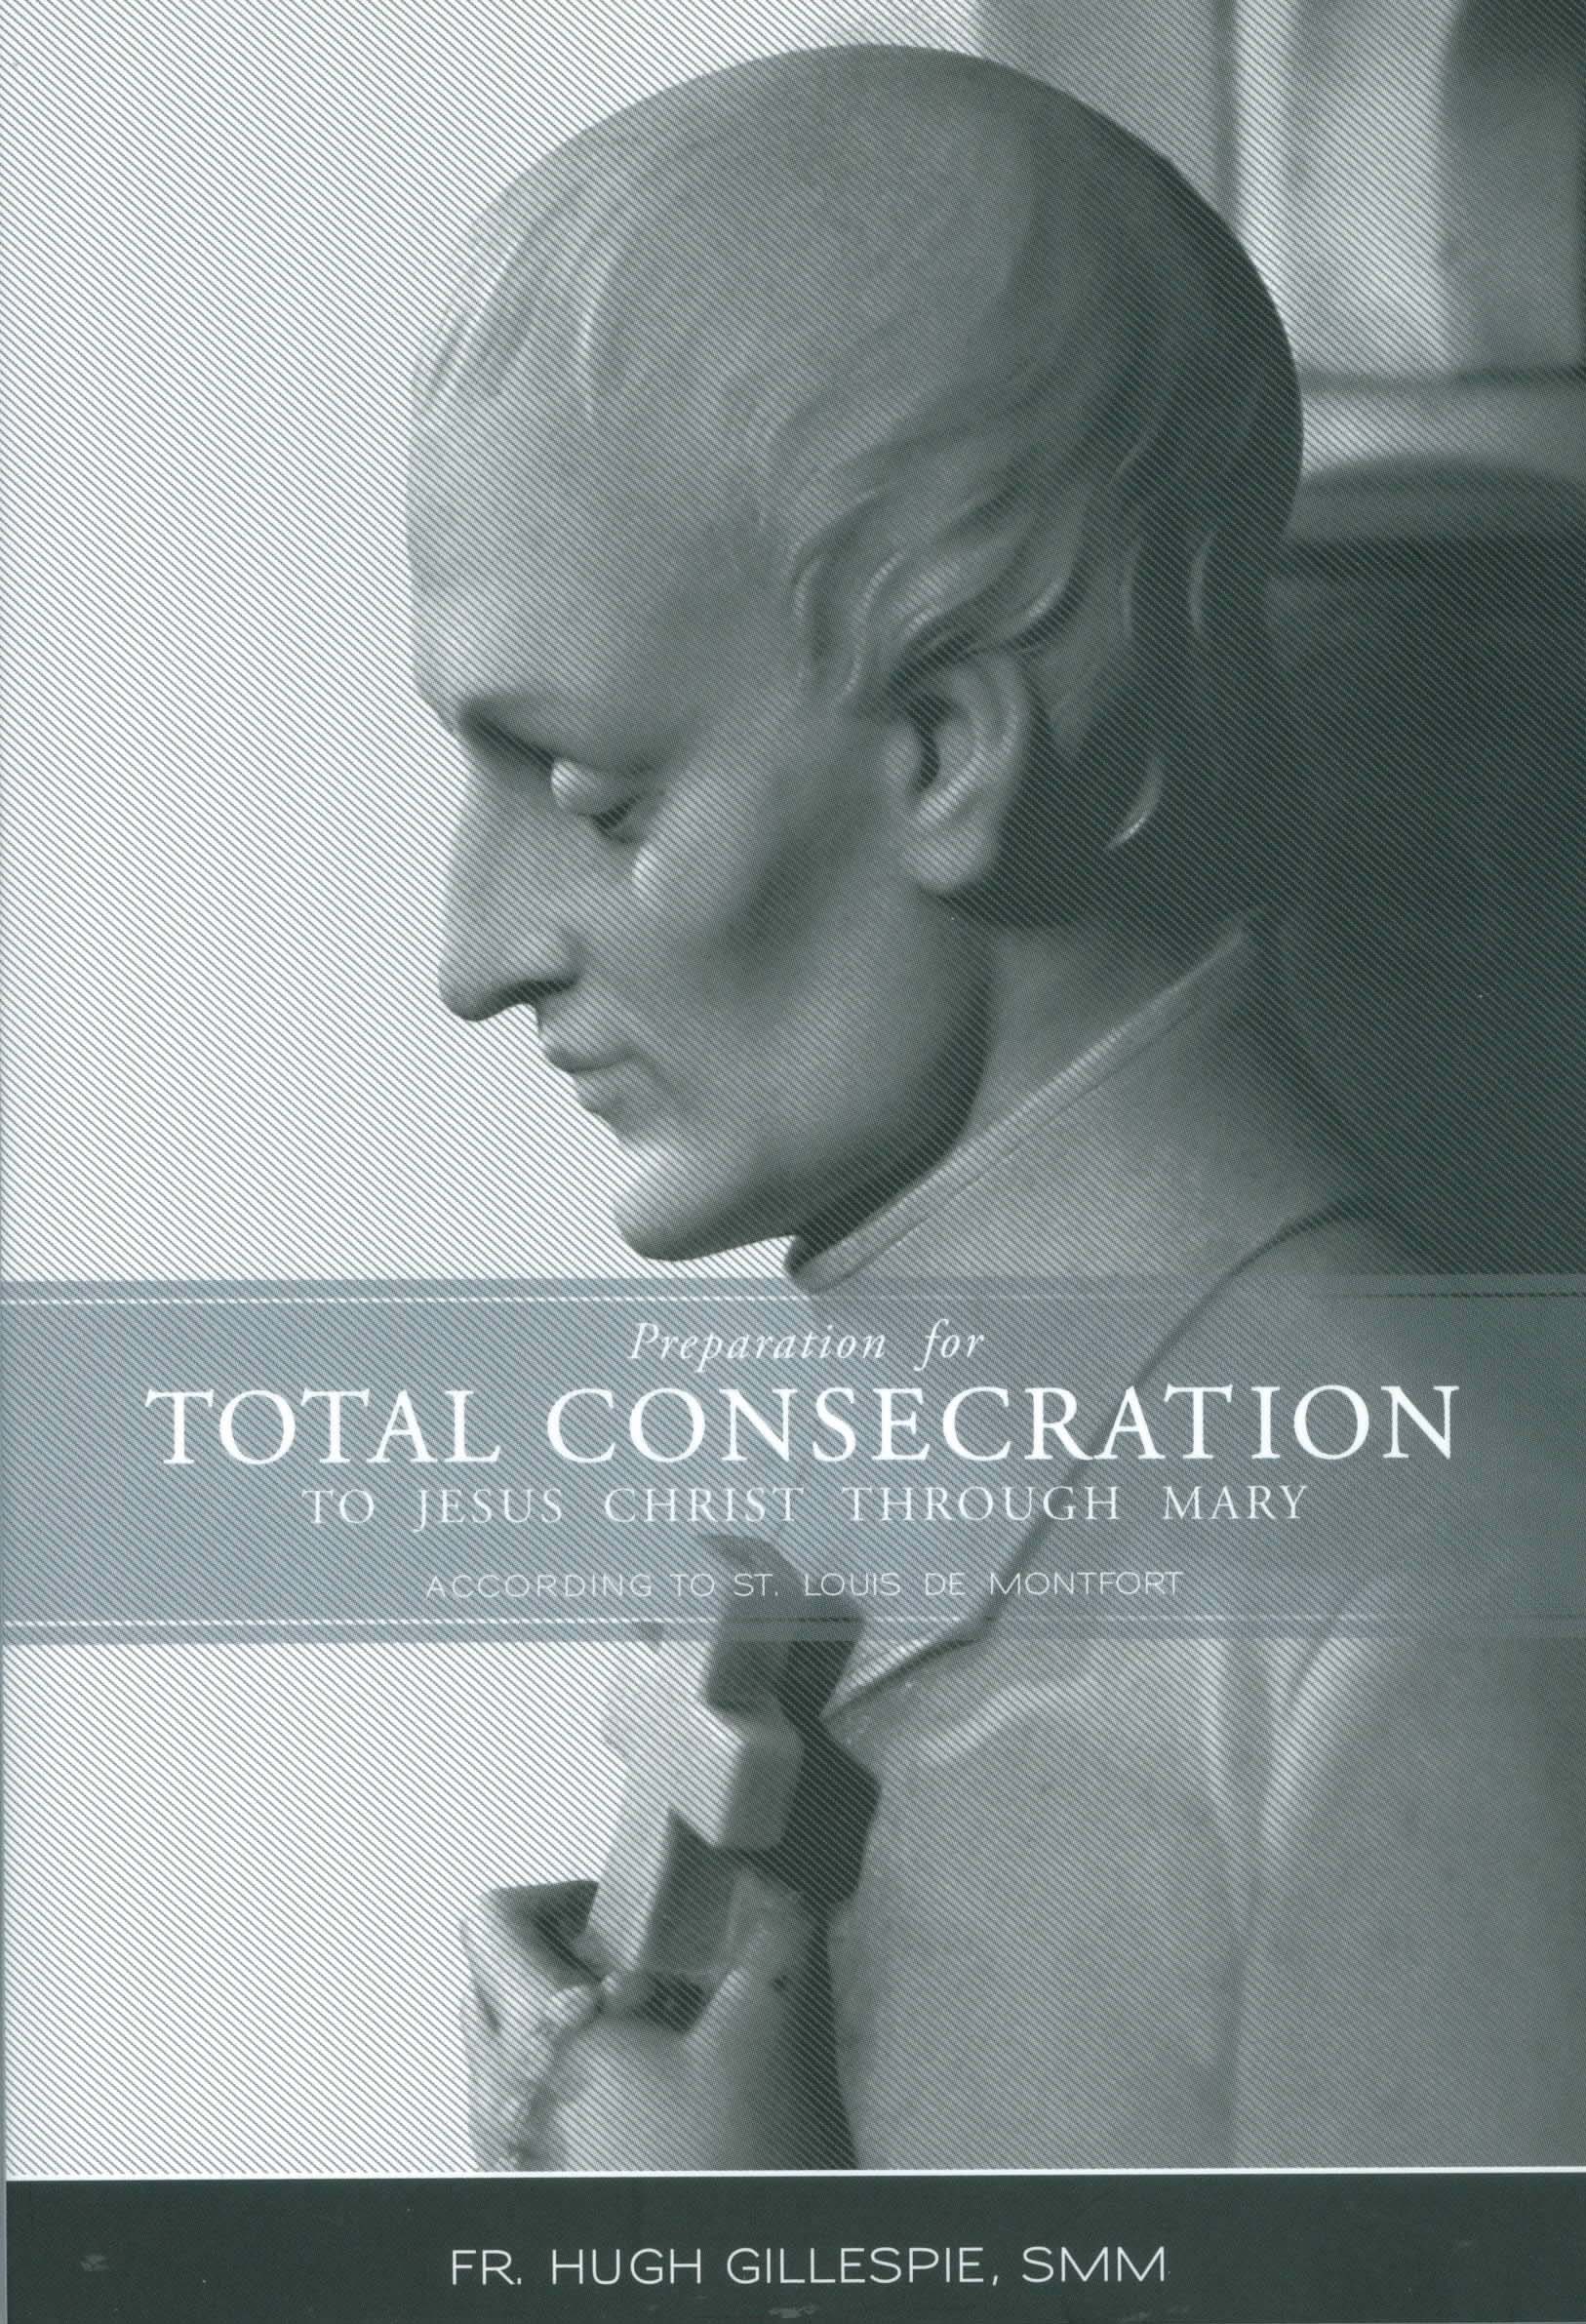 Preparation for Total Consecration According to St. Louis De Montfort by Fr. Hugh Gillespie, SMM